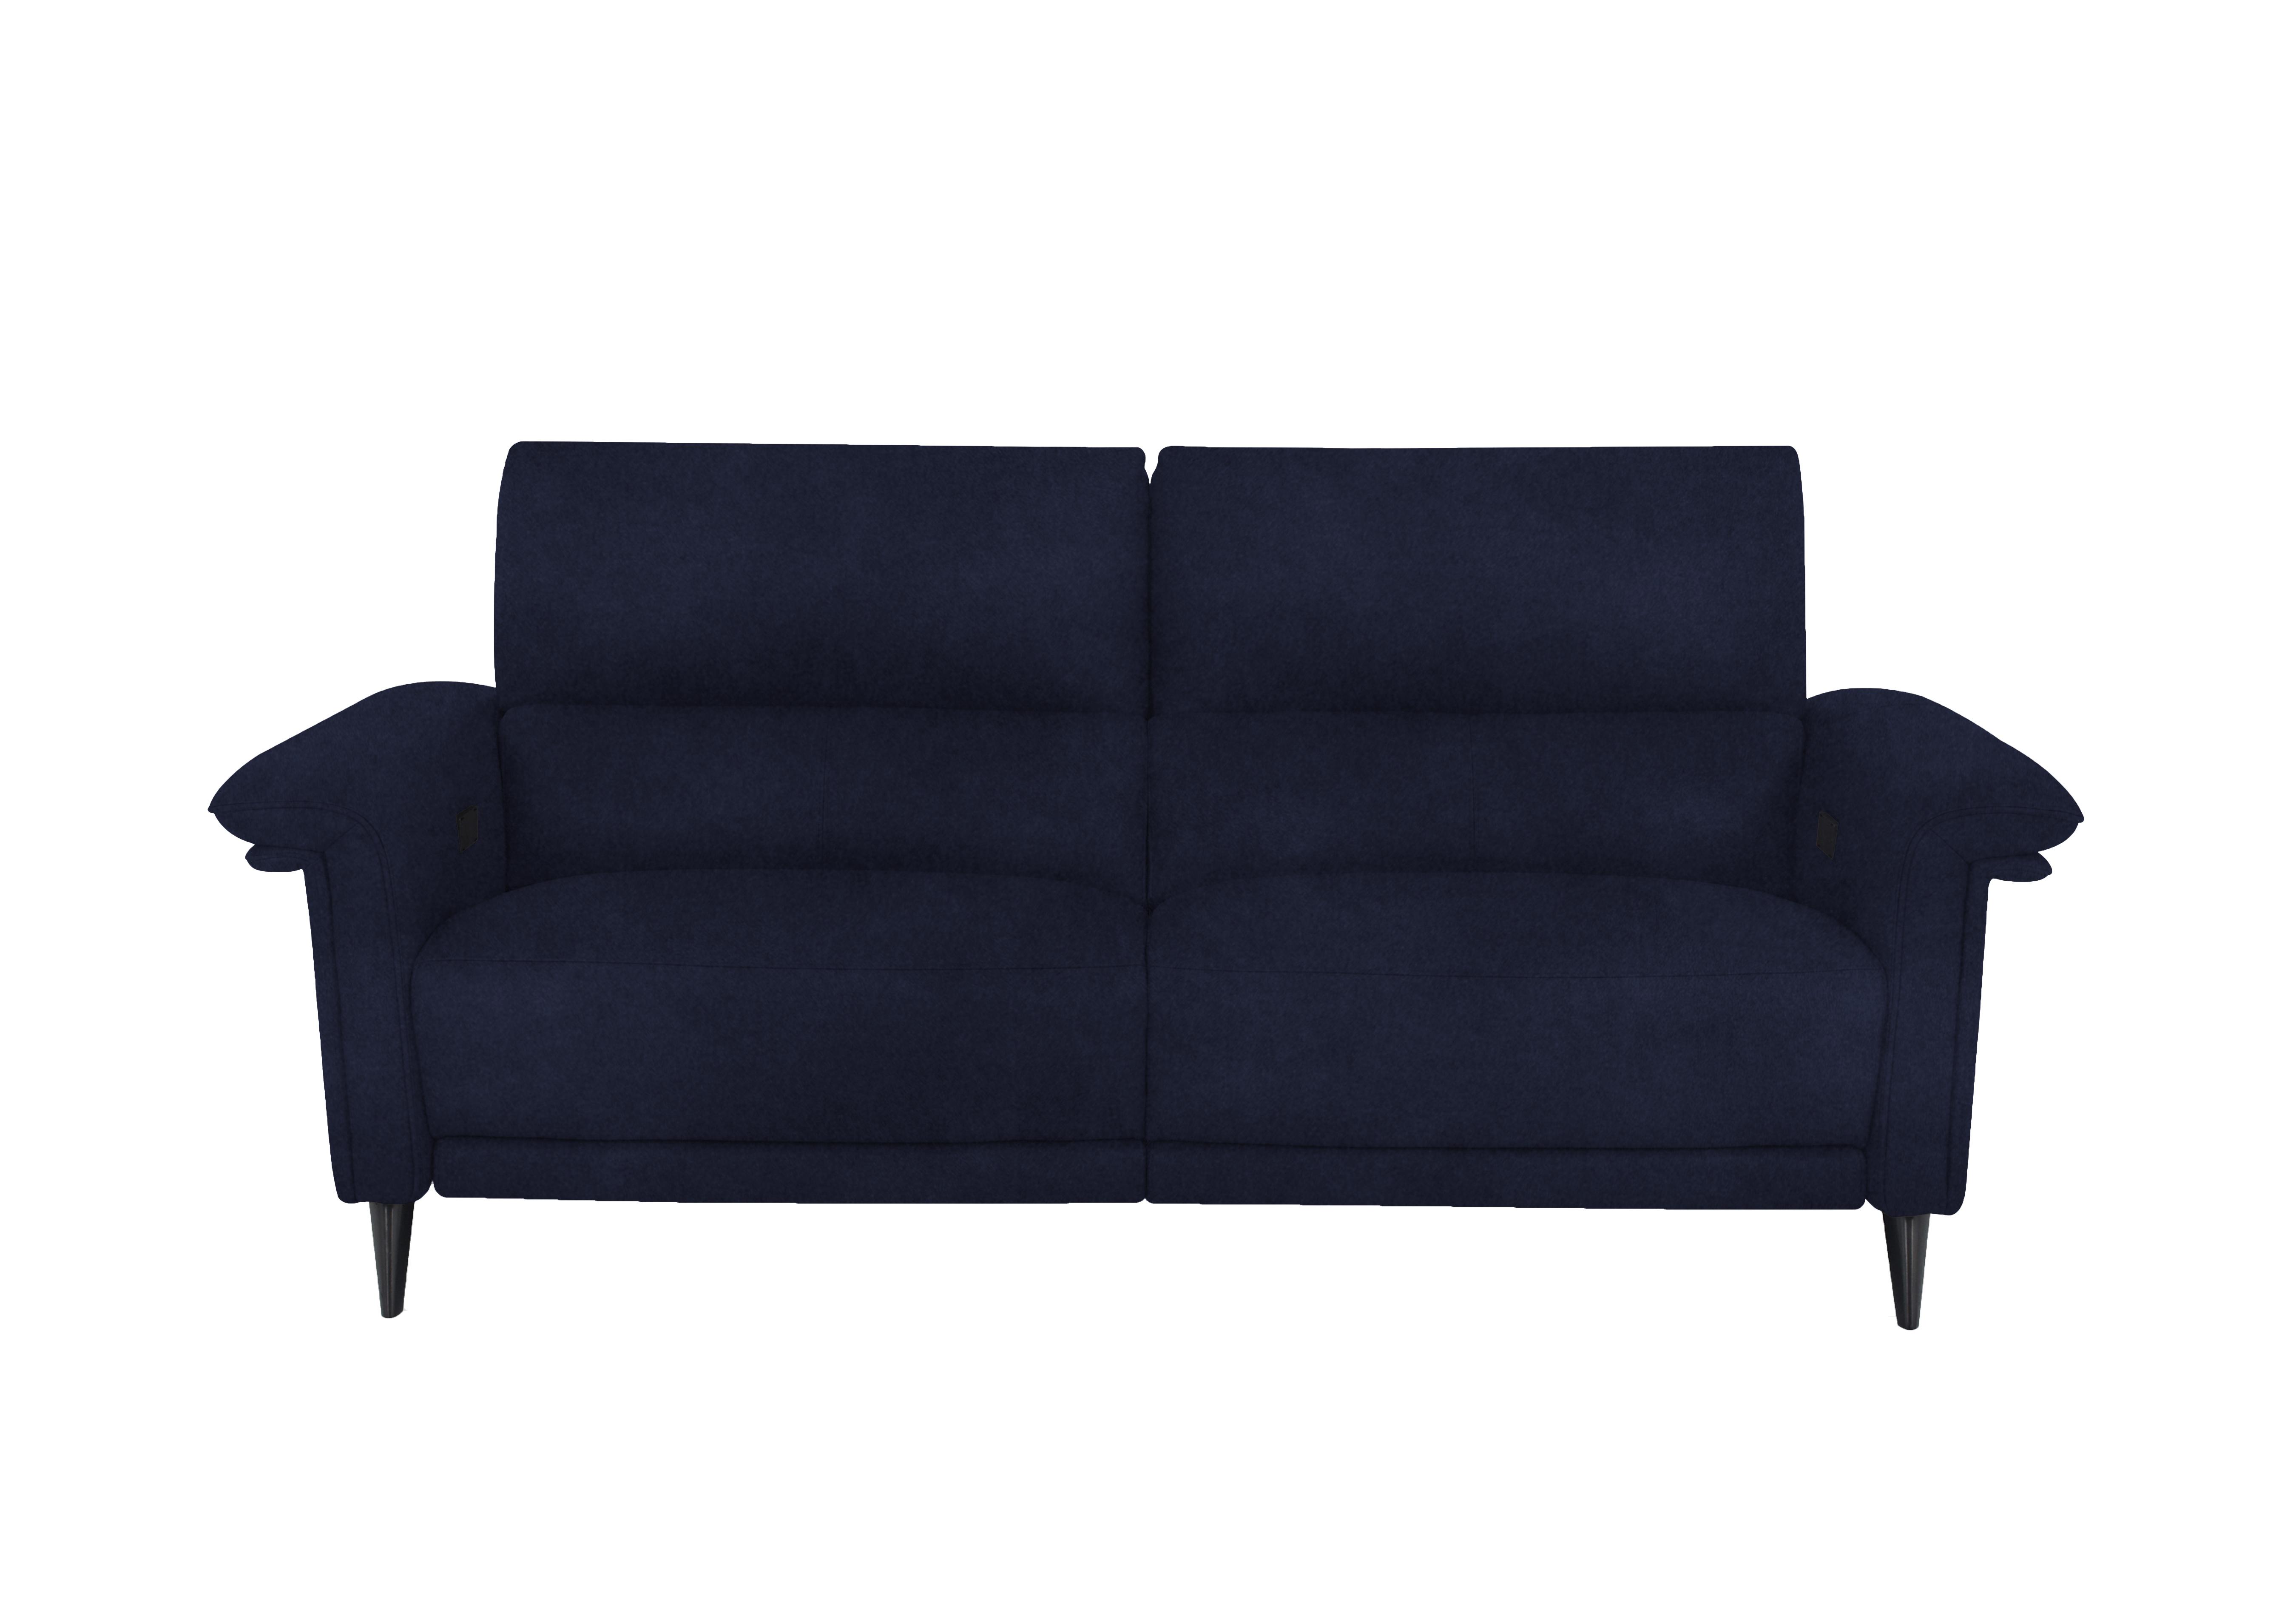 Huxley 3 Seater Fabric Sofa in Fab-Meg-R28 Navy on Furniture Village